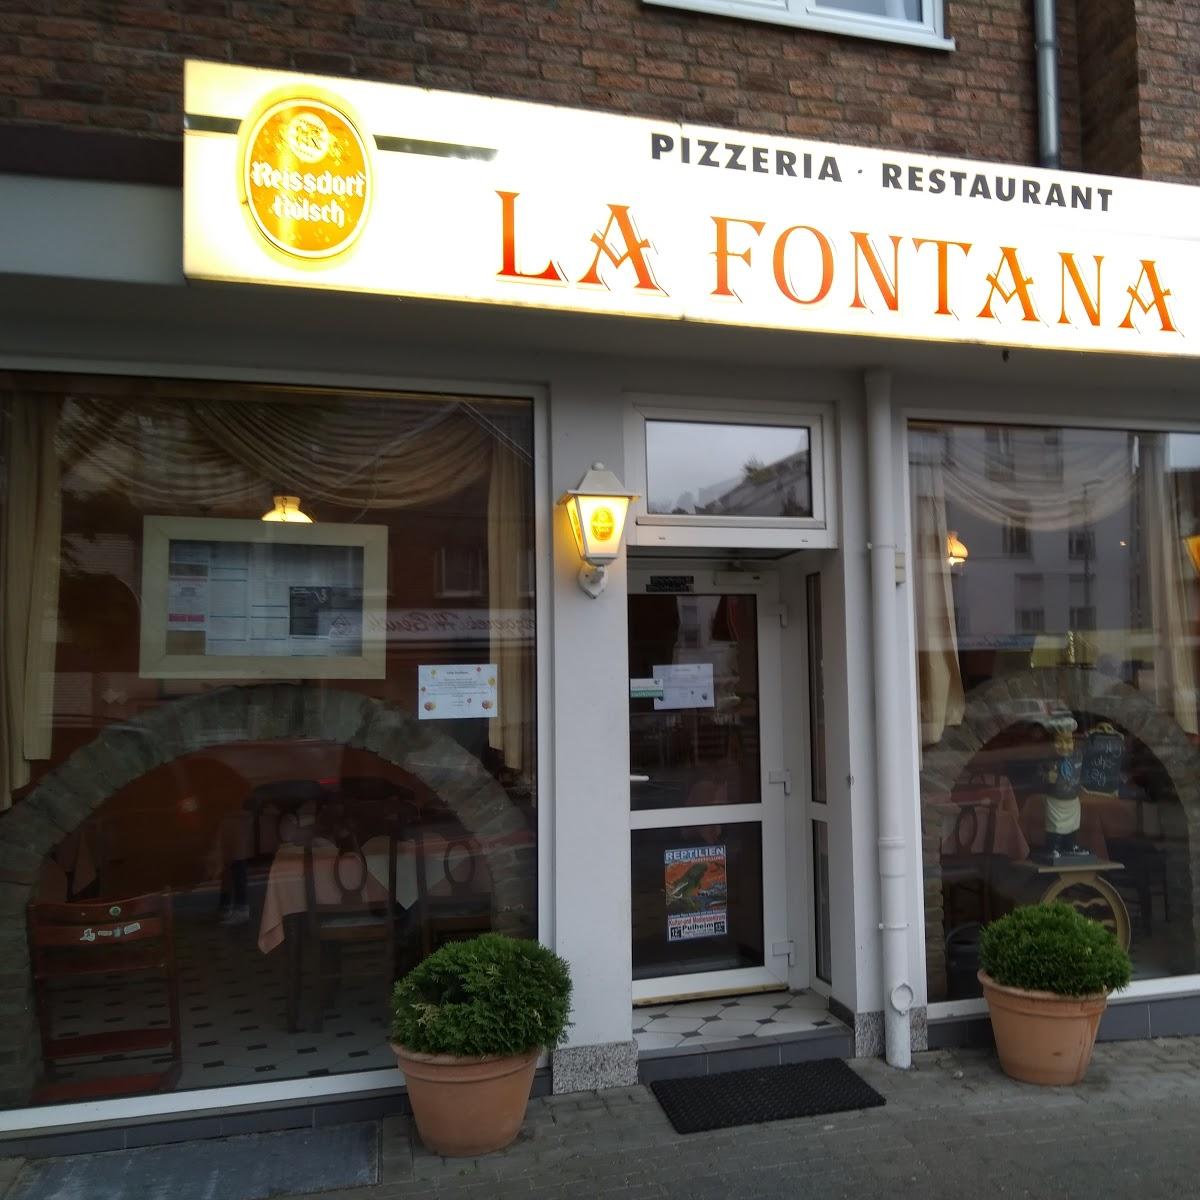 Restaurant "La Fontana" in Pulheim